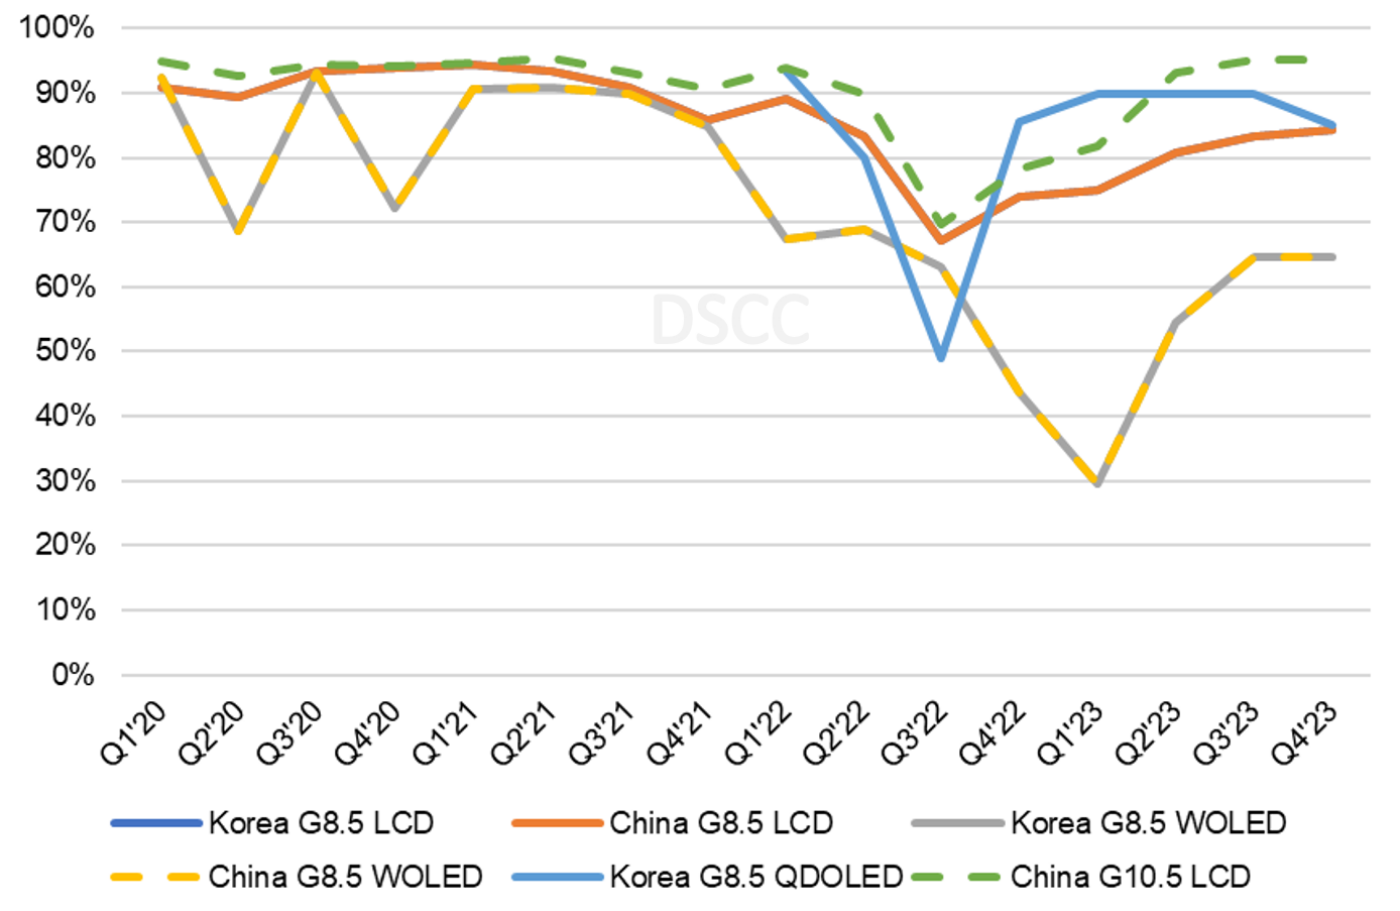 Source: DSCC Advanced TV Panel Cost Report